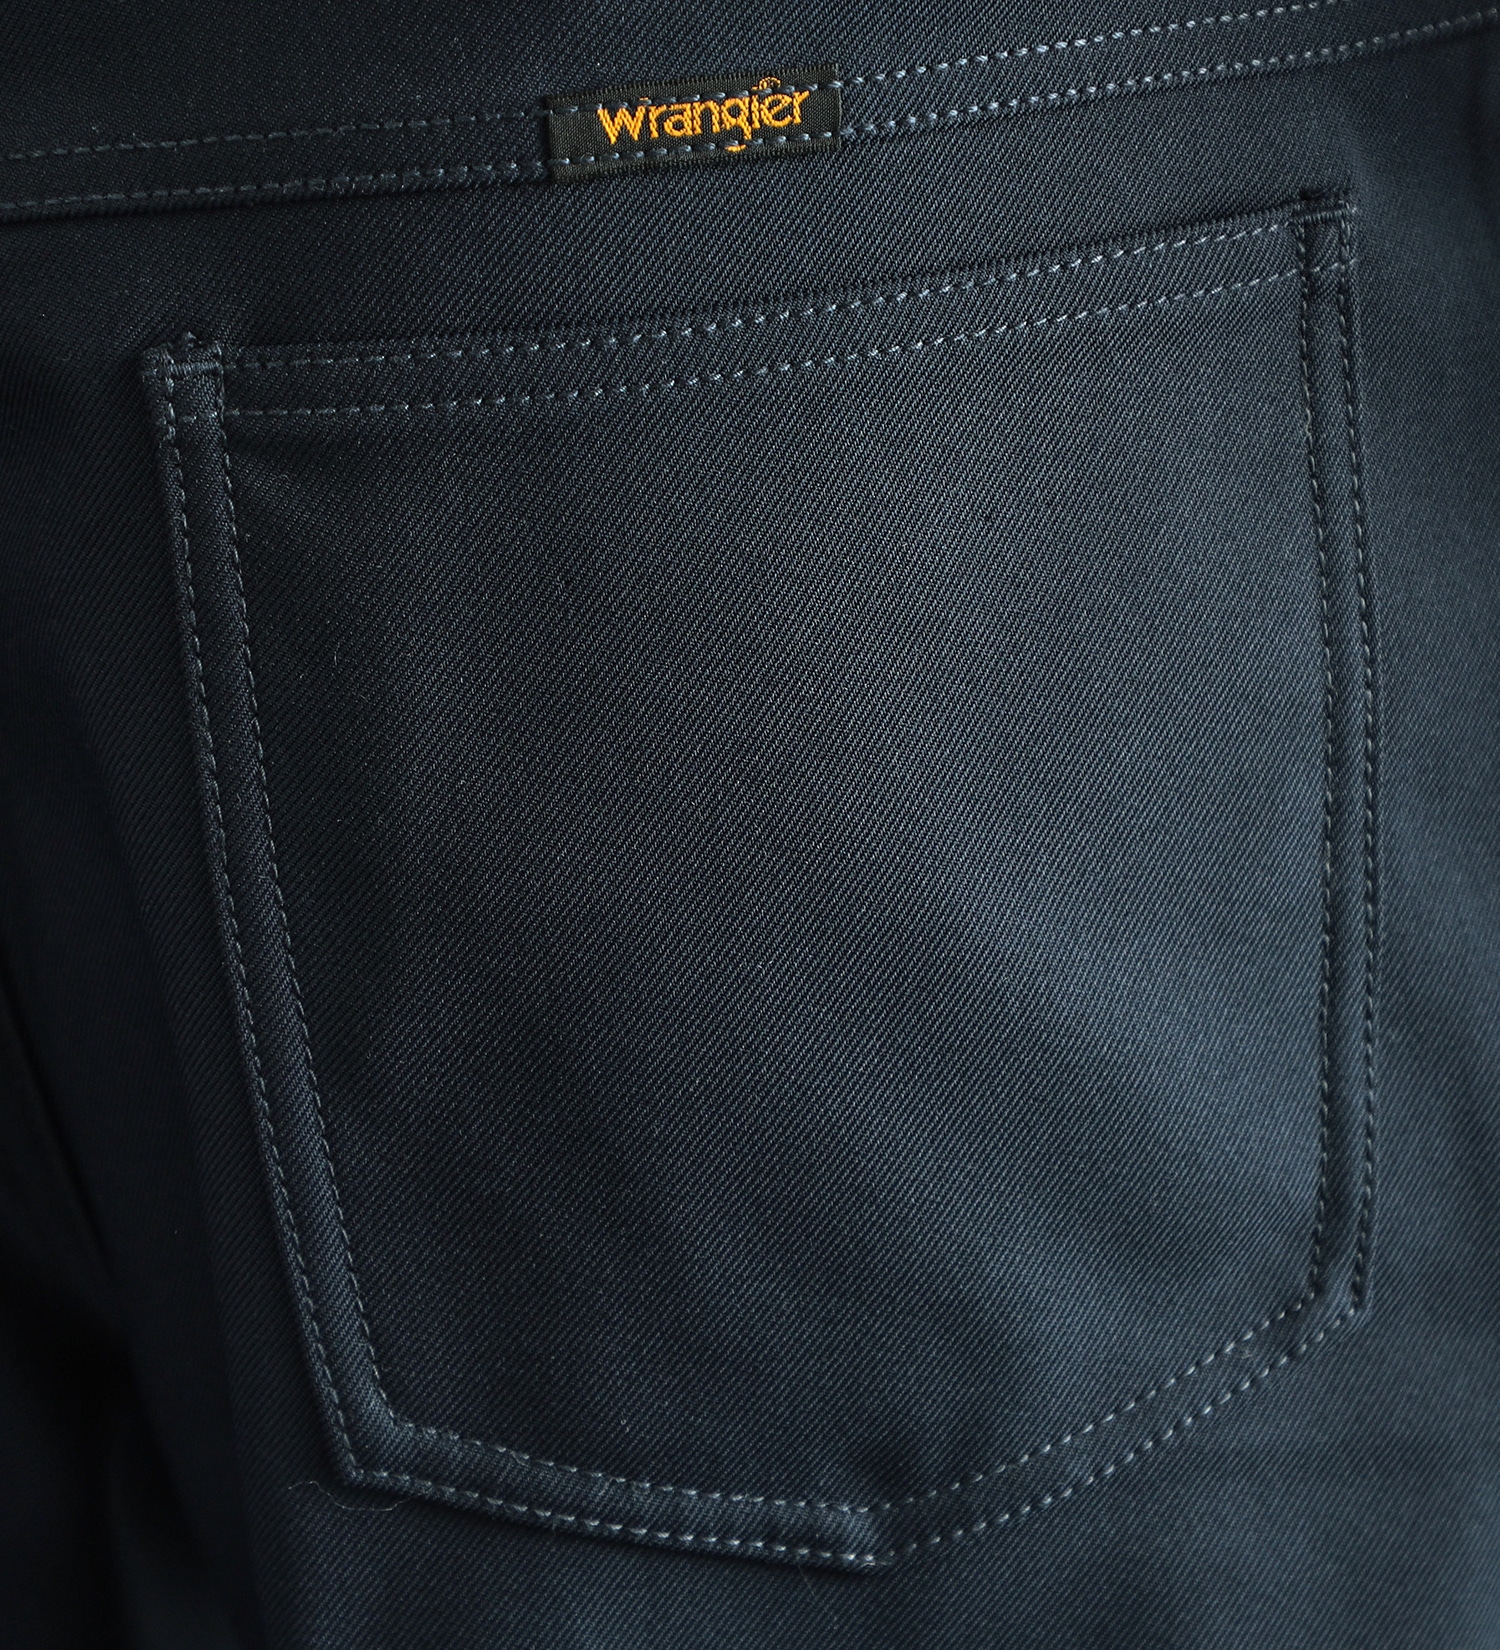 Wrangler(ラングラー)の【ベストセラー】WRANGLER WRANCHER/ランチャー フレアードレスパンツ（レングス71cm）|パンツ/パンツ/メンズ|ネイビー